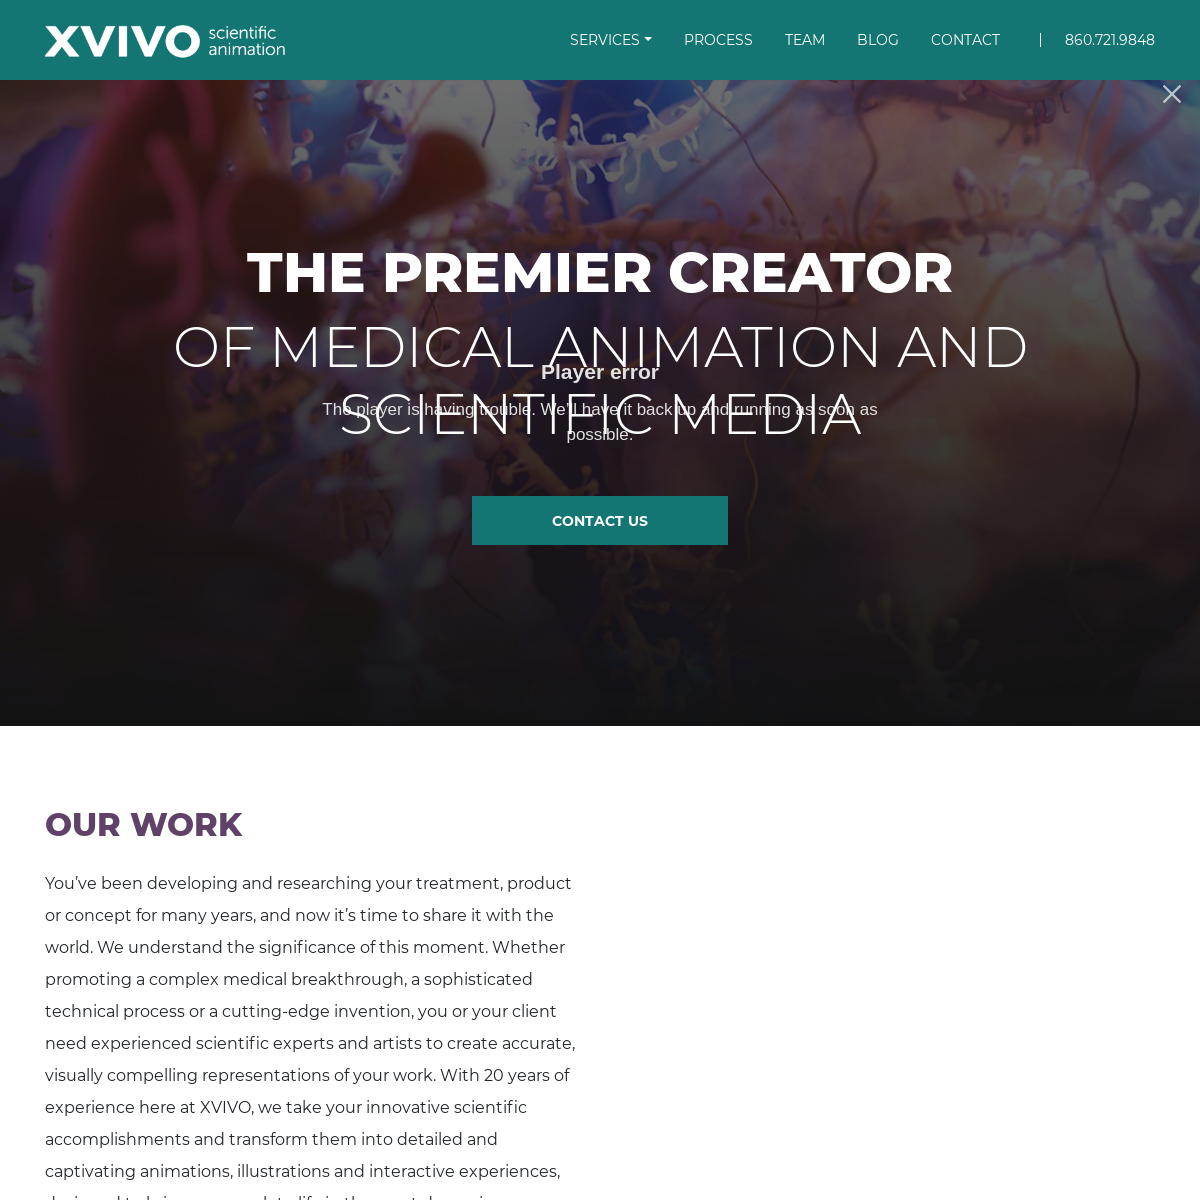 A complete backup of xvivo.com